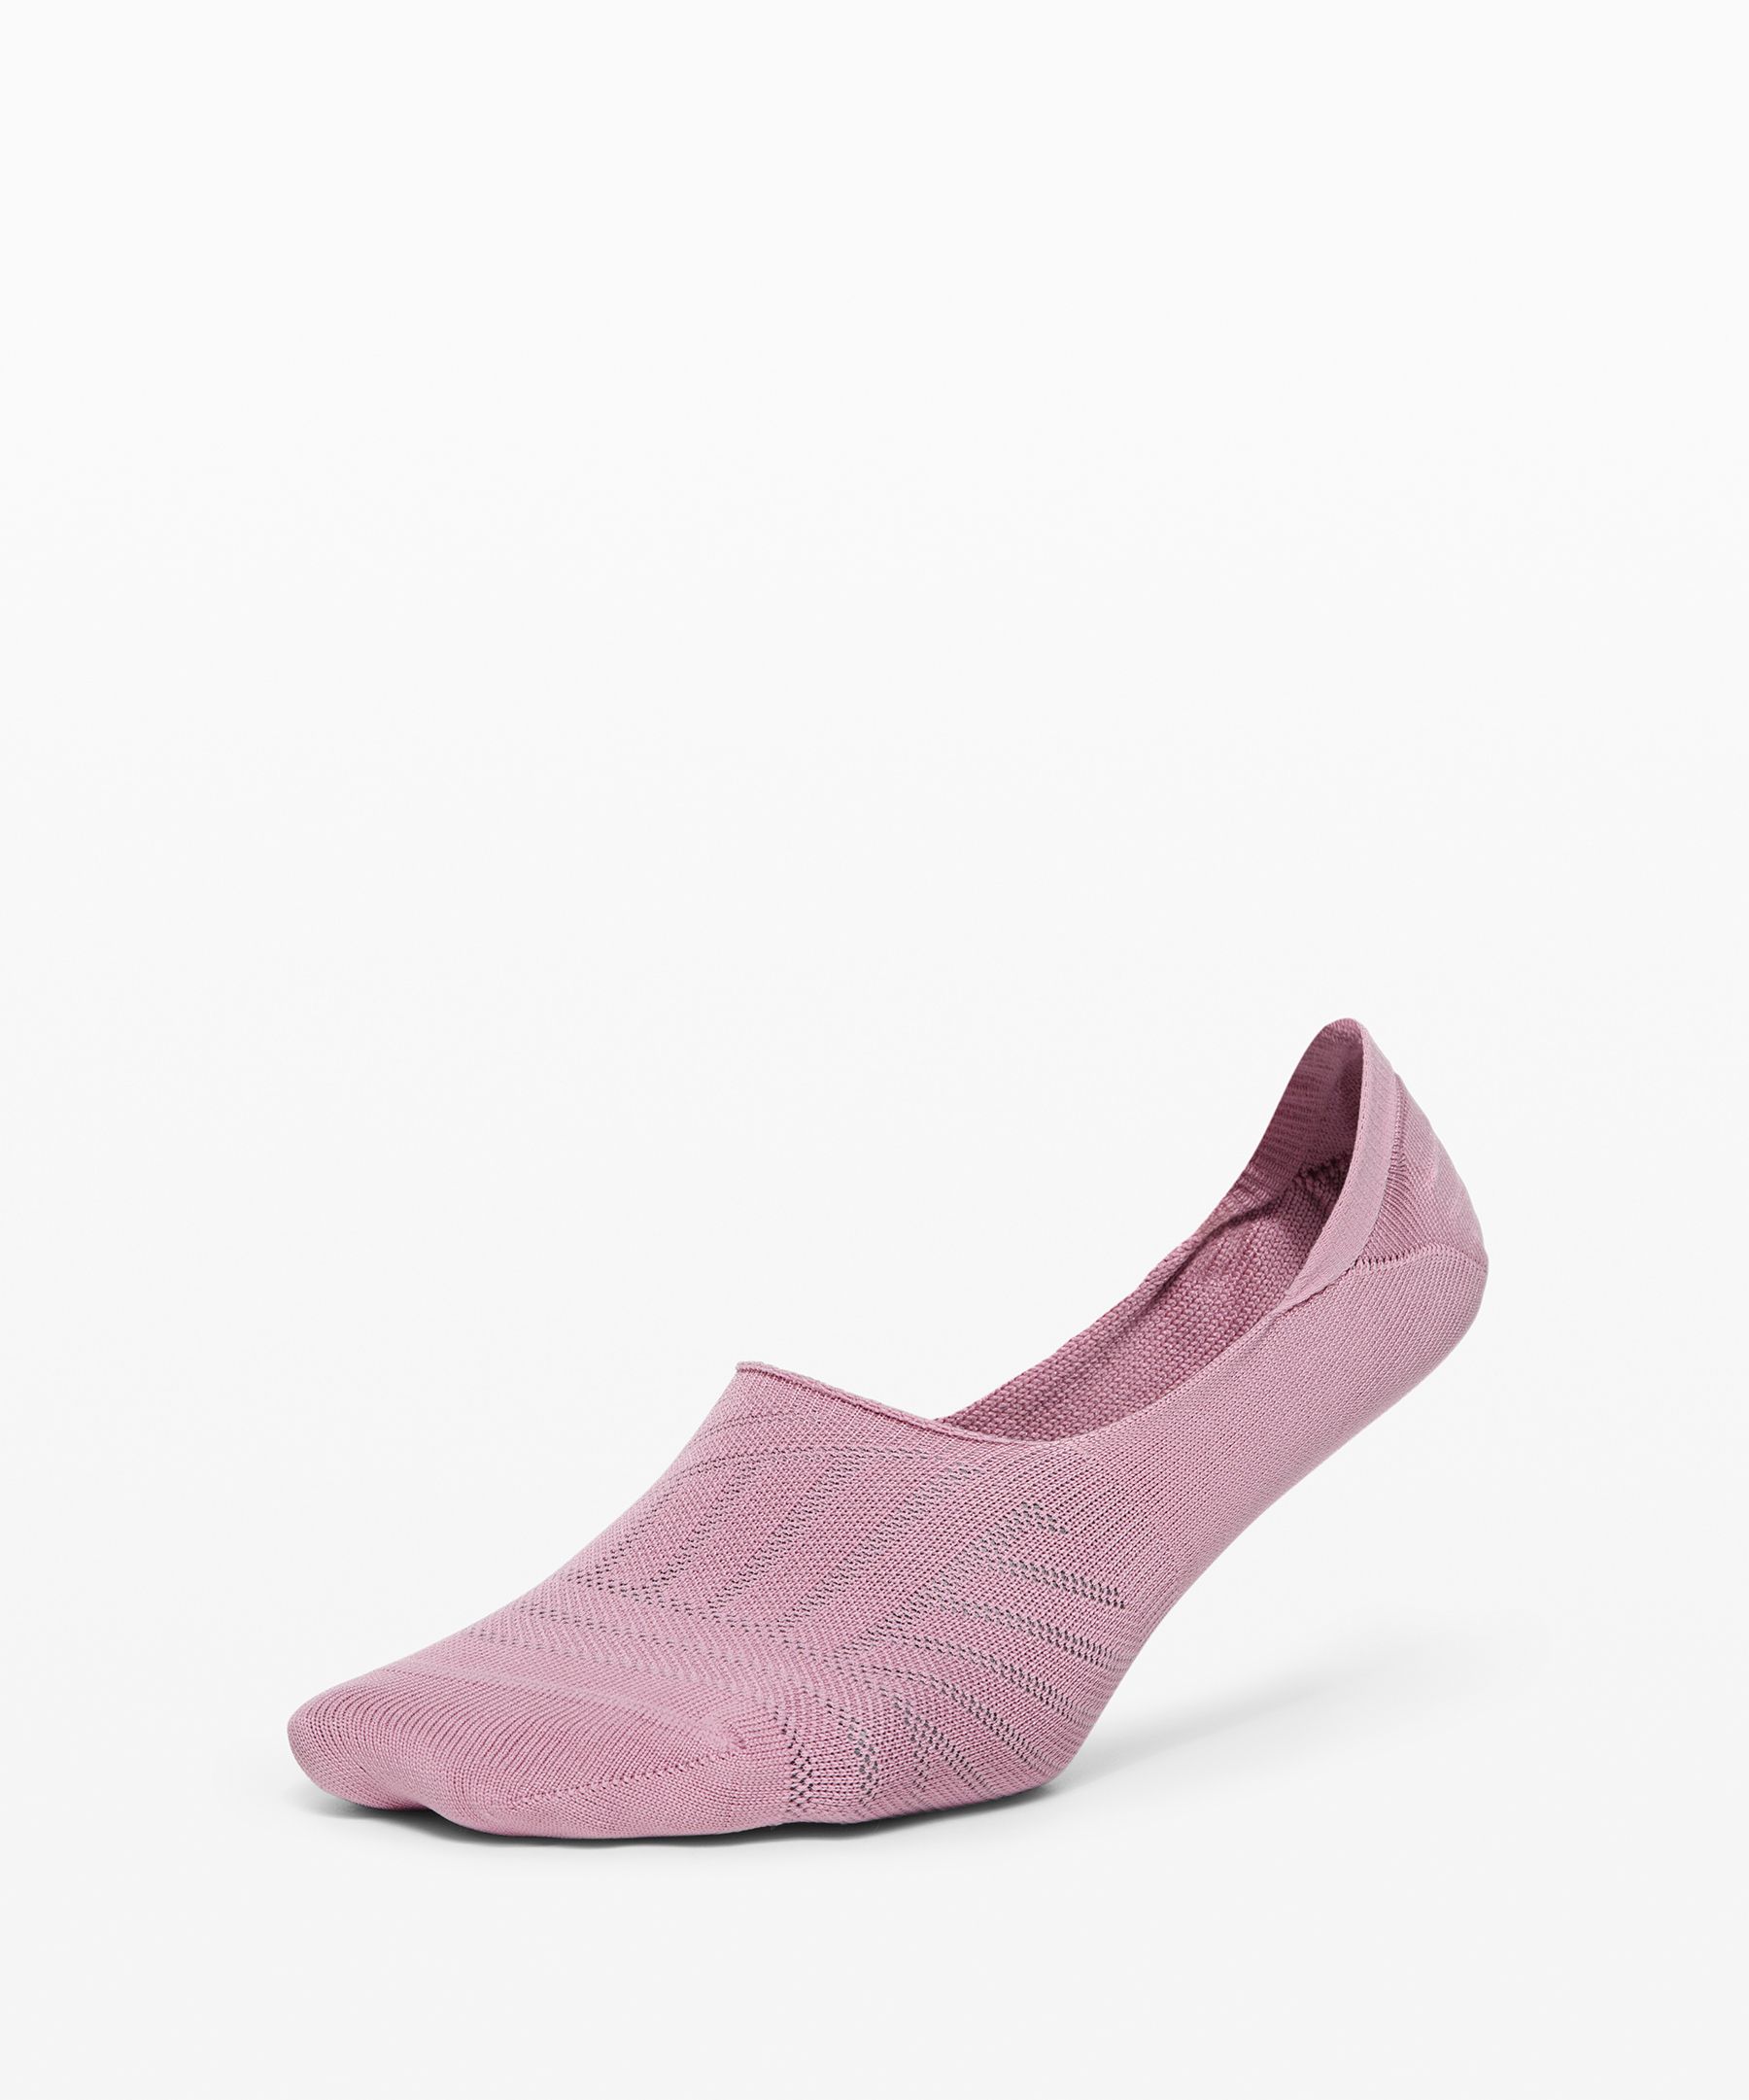 Lululemon Secret Sock In Pink Taupe/moss Rose